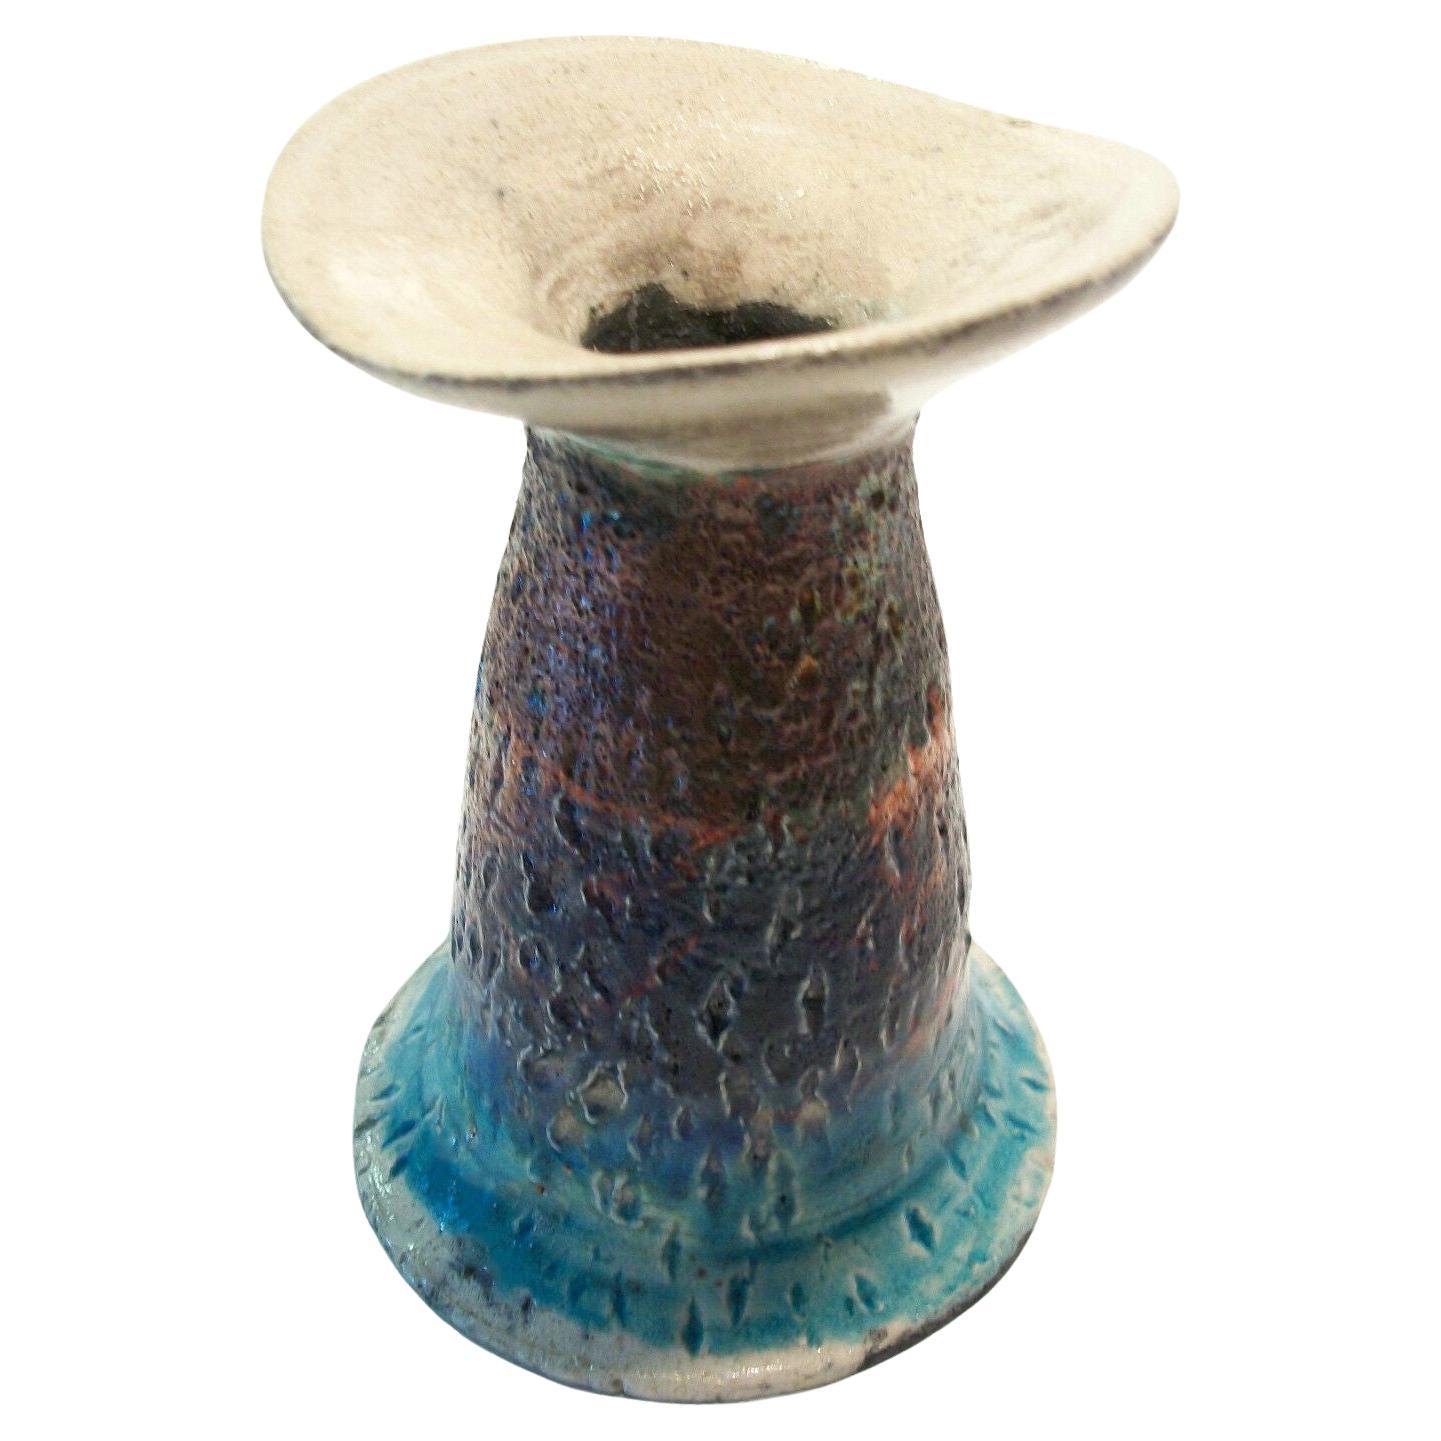 Vintage Raku Studio Pottery Vase - Iridescent Glaze - Signed - Circa 1970's For Sale